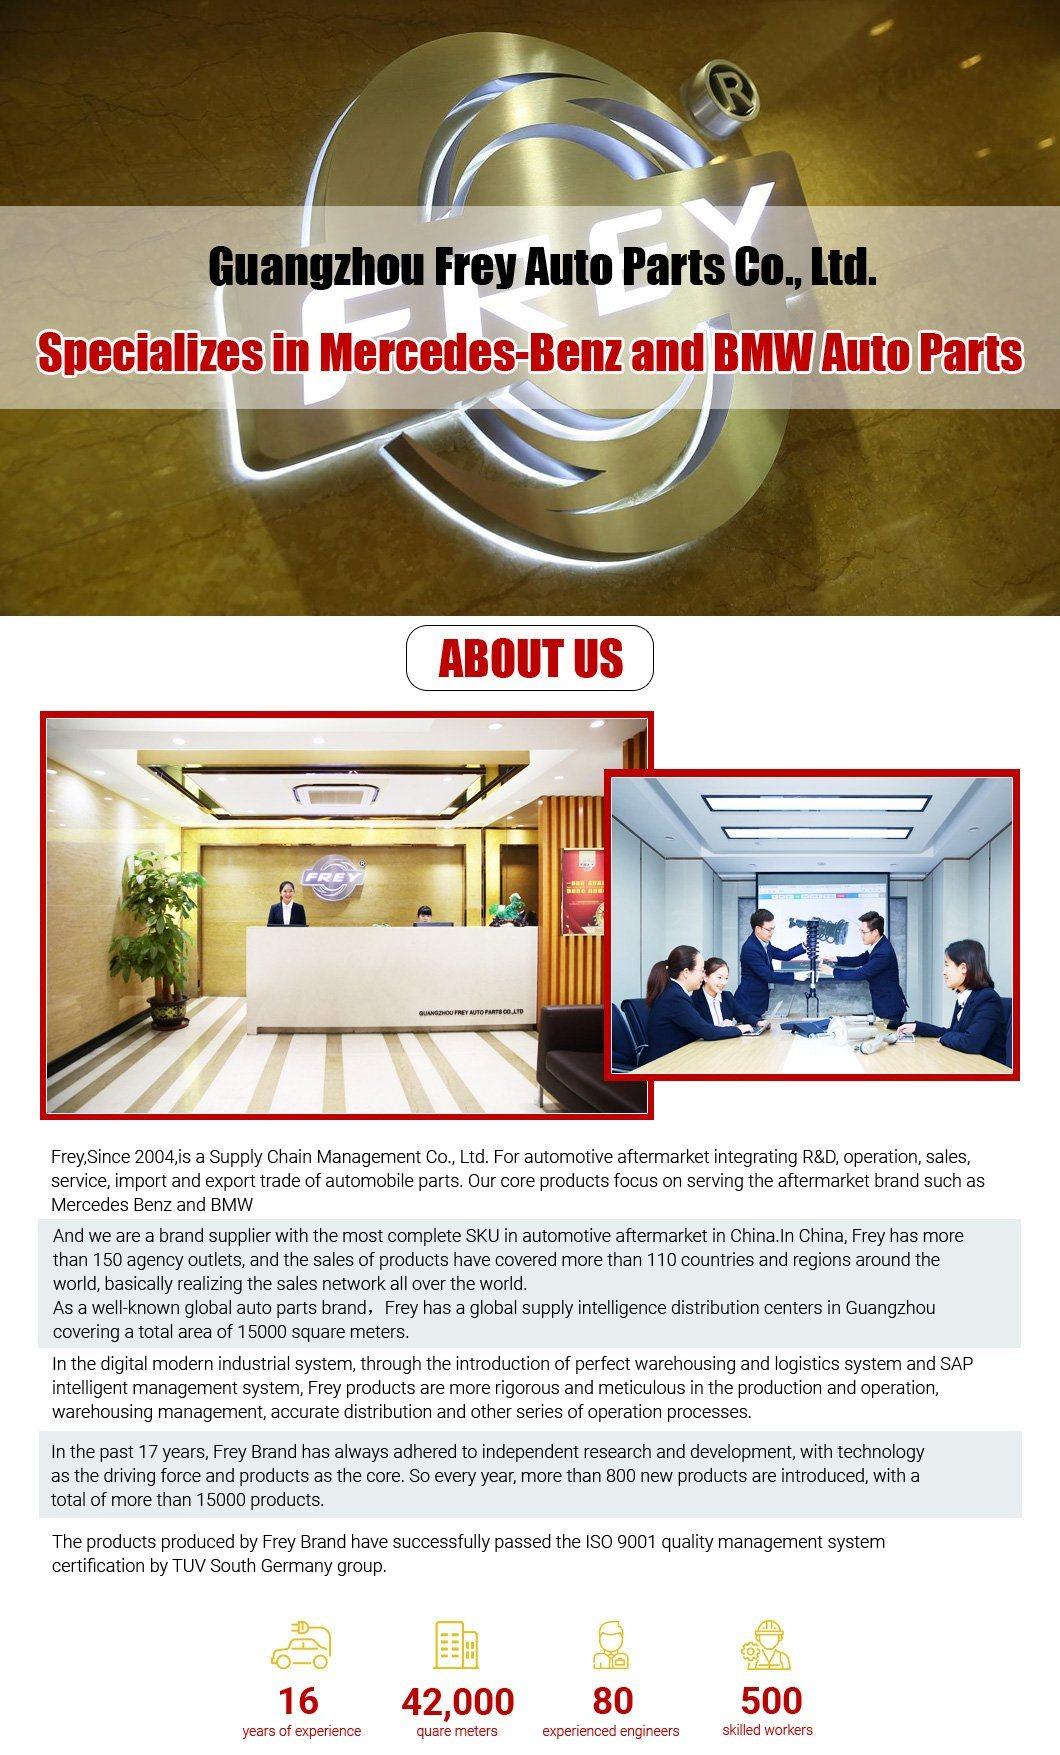 Frey Auto Parts for Mercedes China Car Parts Wholesaler for Mercedes-Benz Sprinter W901 W902 W903 W904 W905 W906 W907 W910 W447 Vito Car Parts Supplier